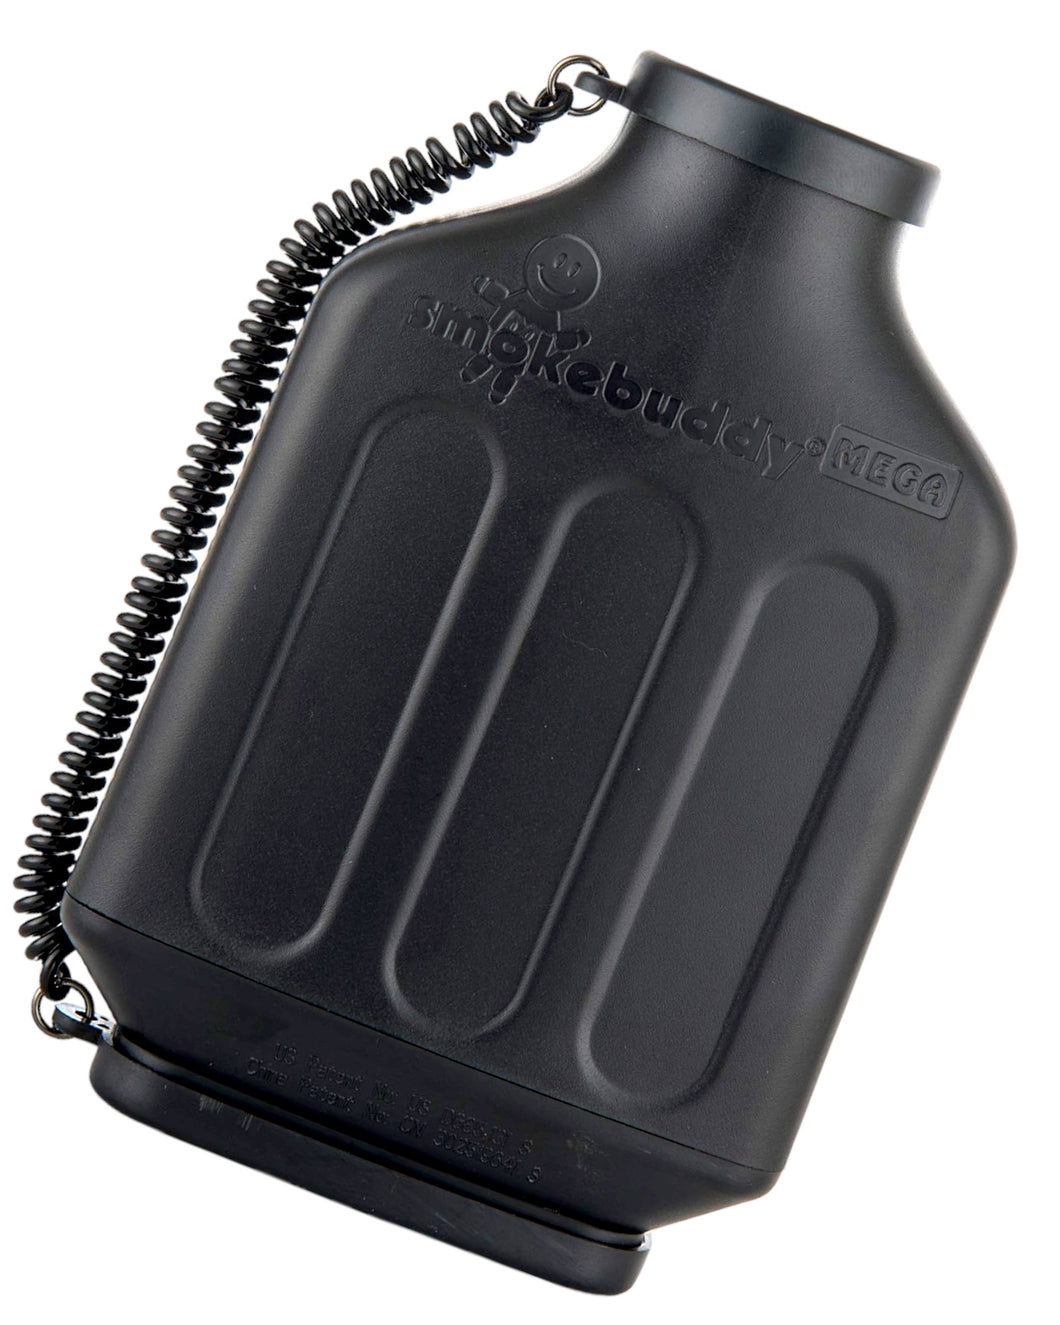 A black Smoke Buddy Mega Personal Air Filter.